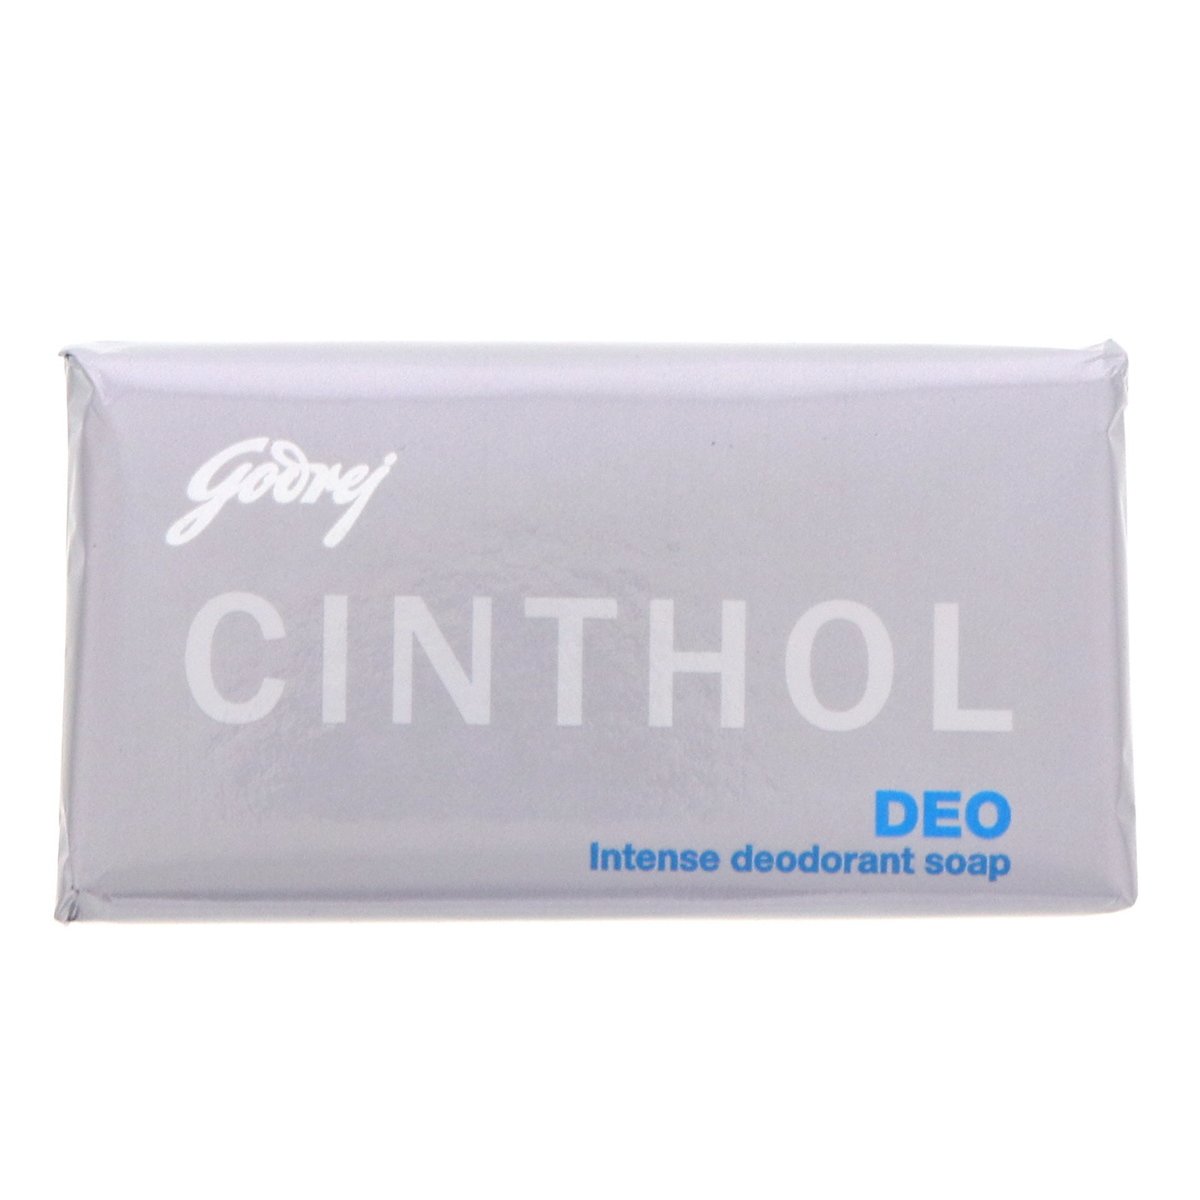 Cinthol Deo Intense Deodorant Soap 125 g